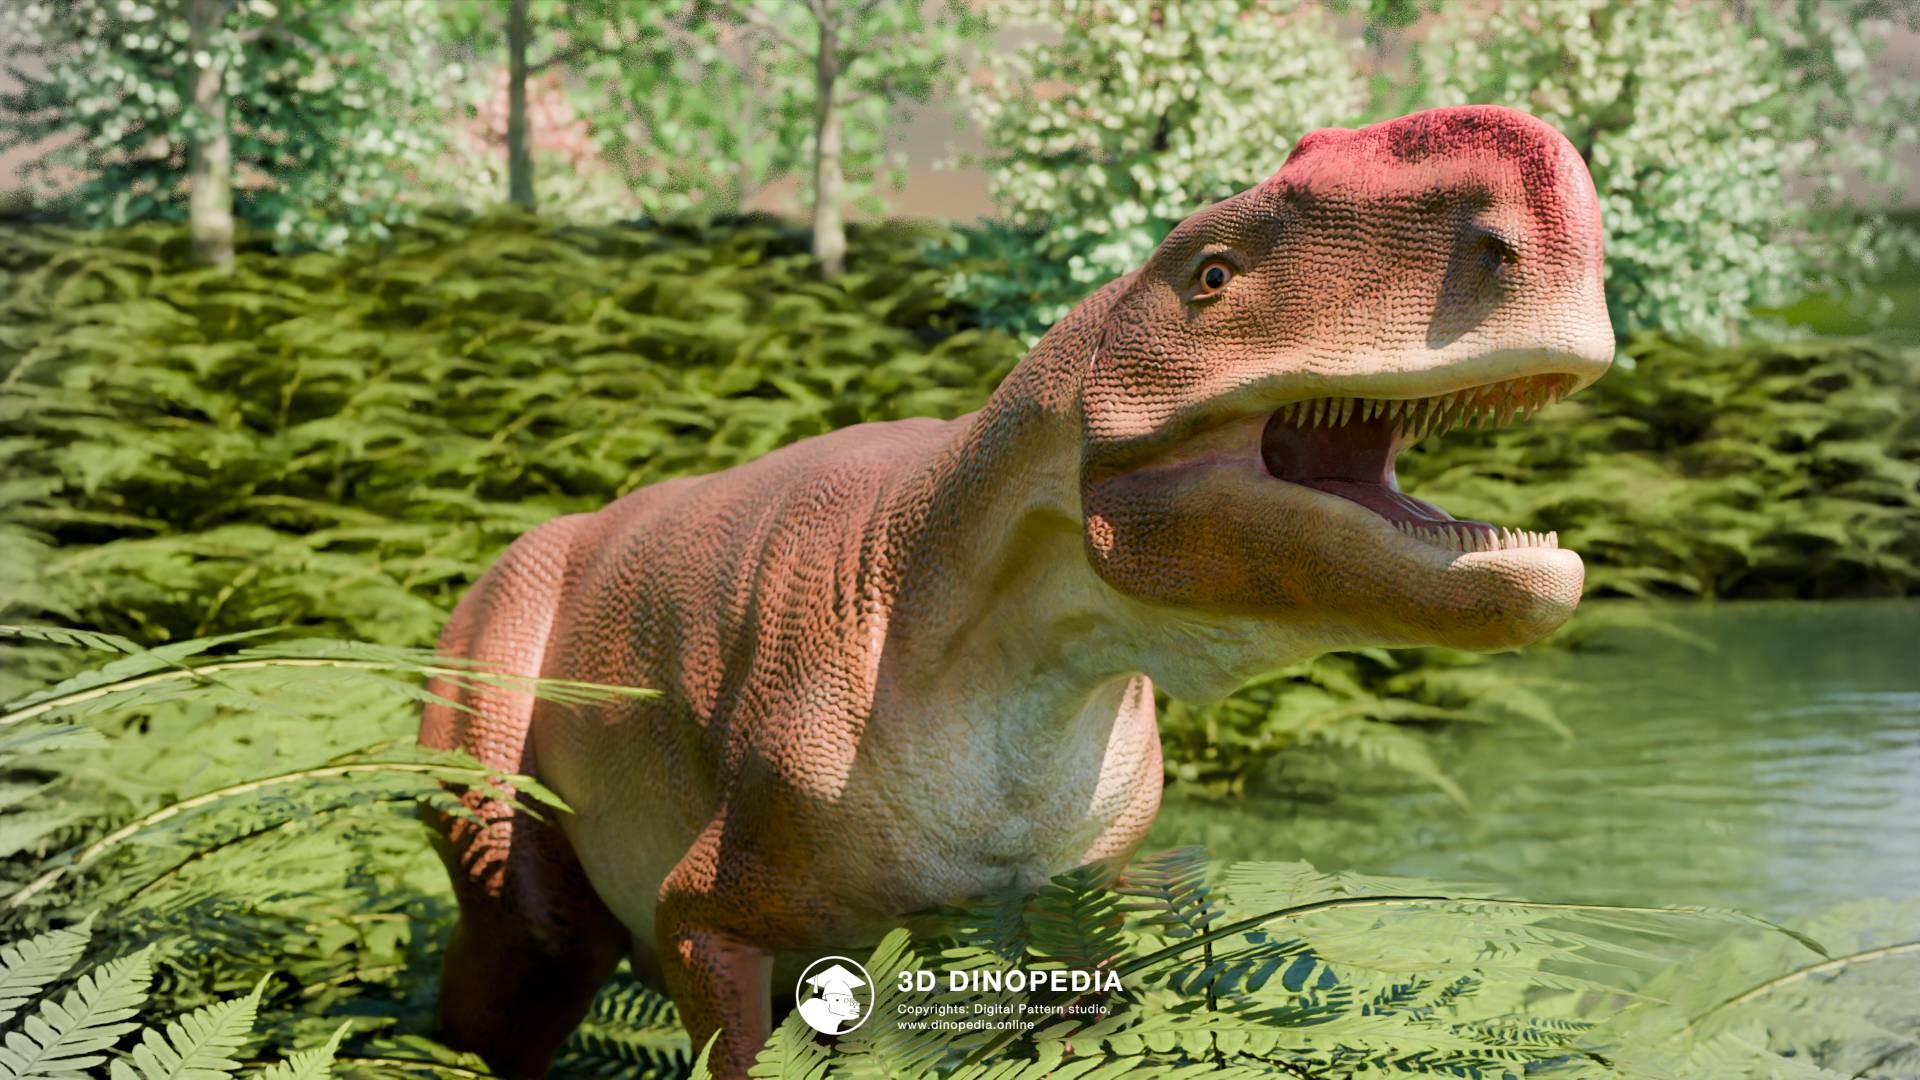 3D Dinopedia New 3D Cronopio & Dino Update!